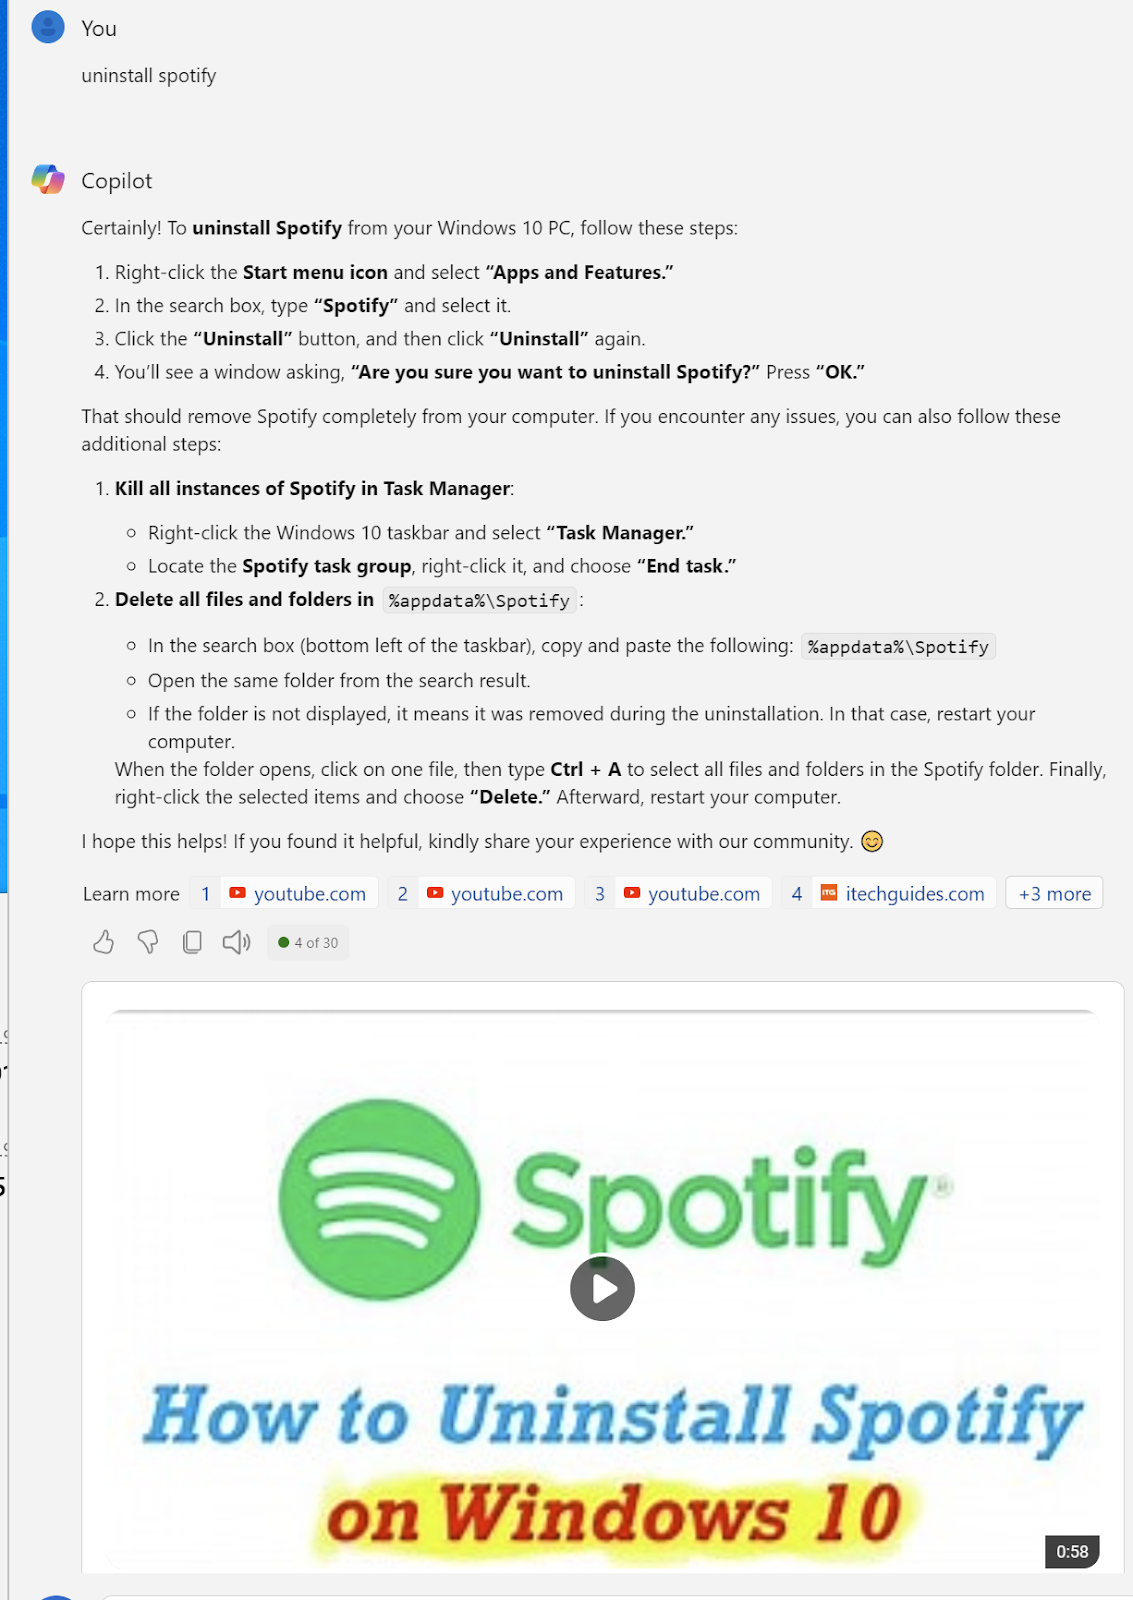 Copilot explains how to uninstall Spotify